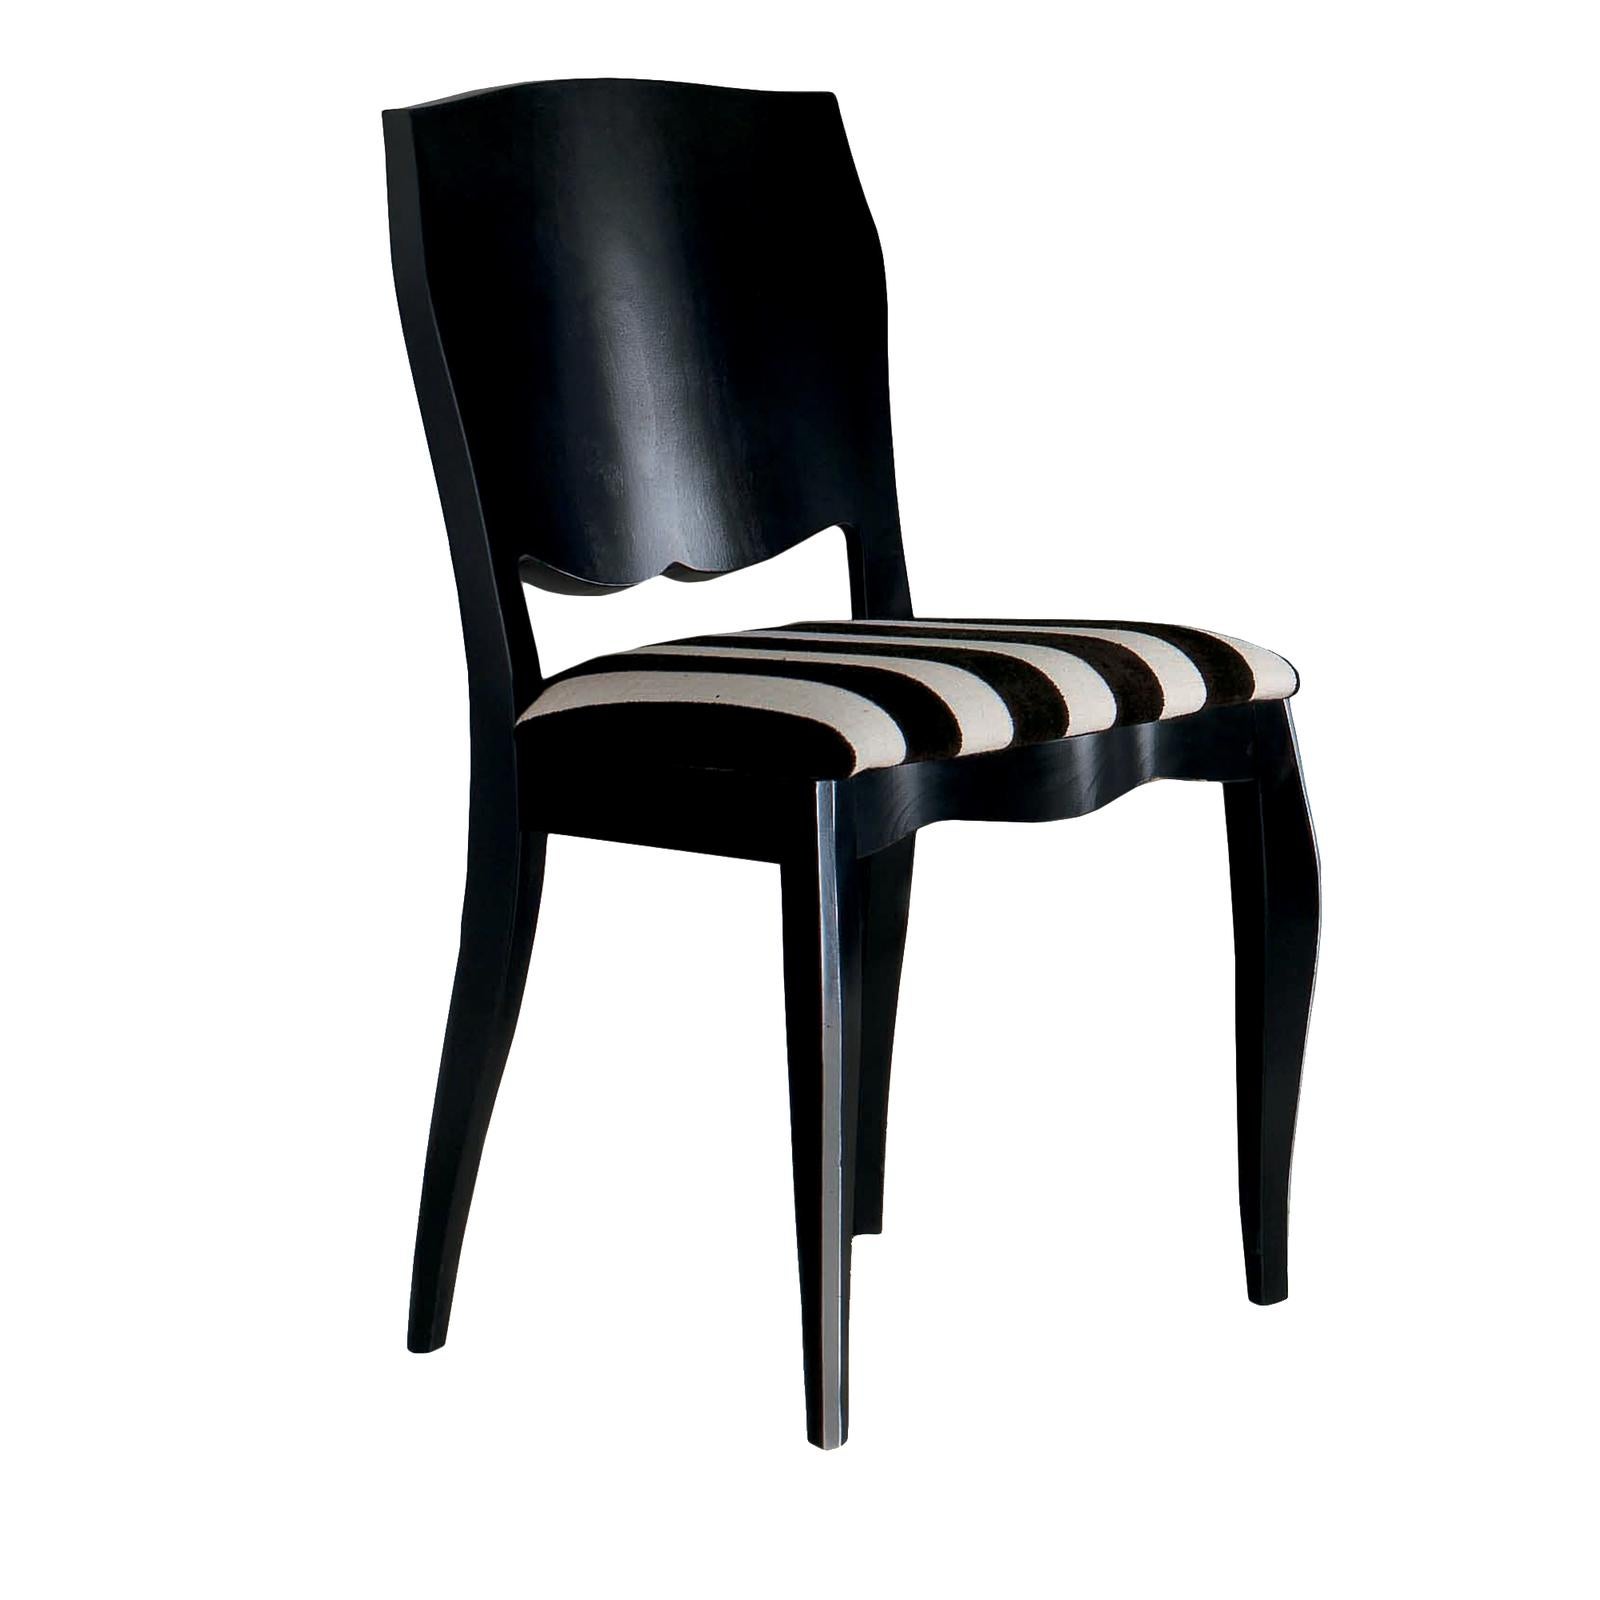 Italian Black Dining Chair with Black & White Cushion